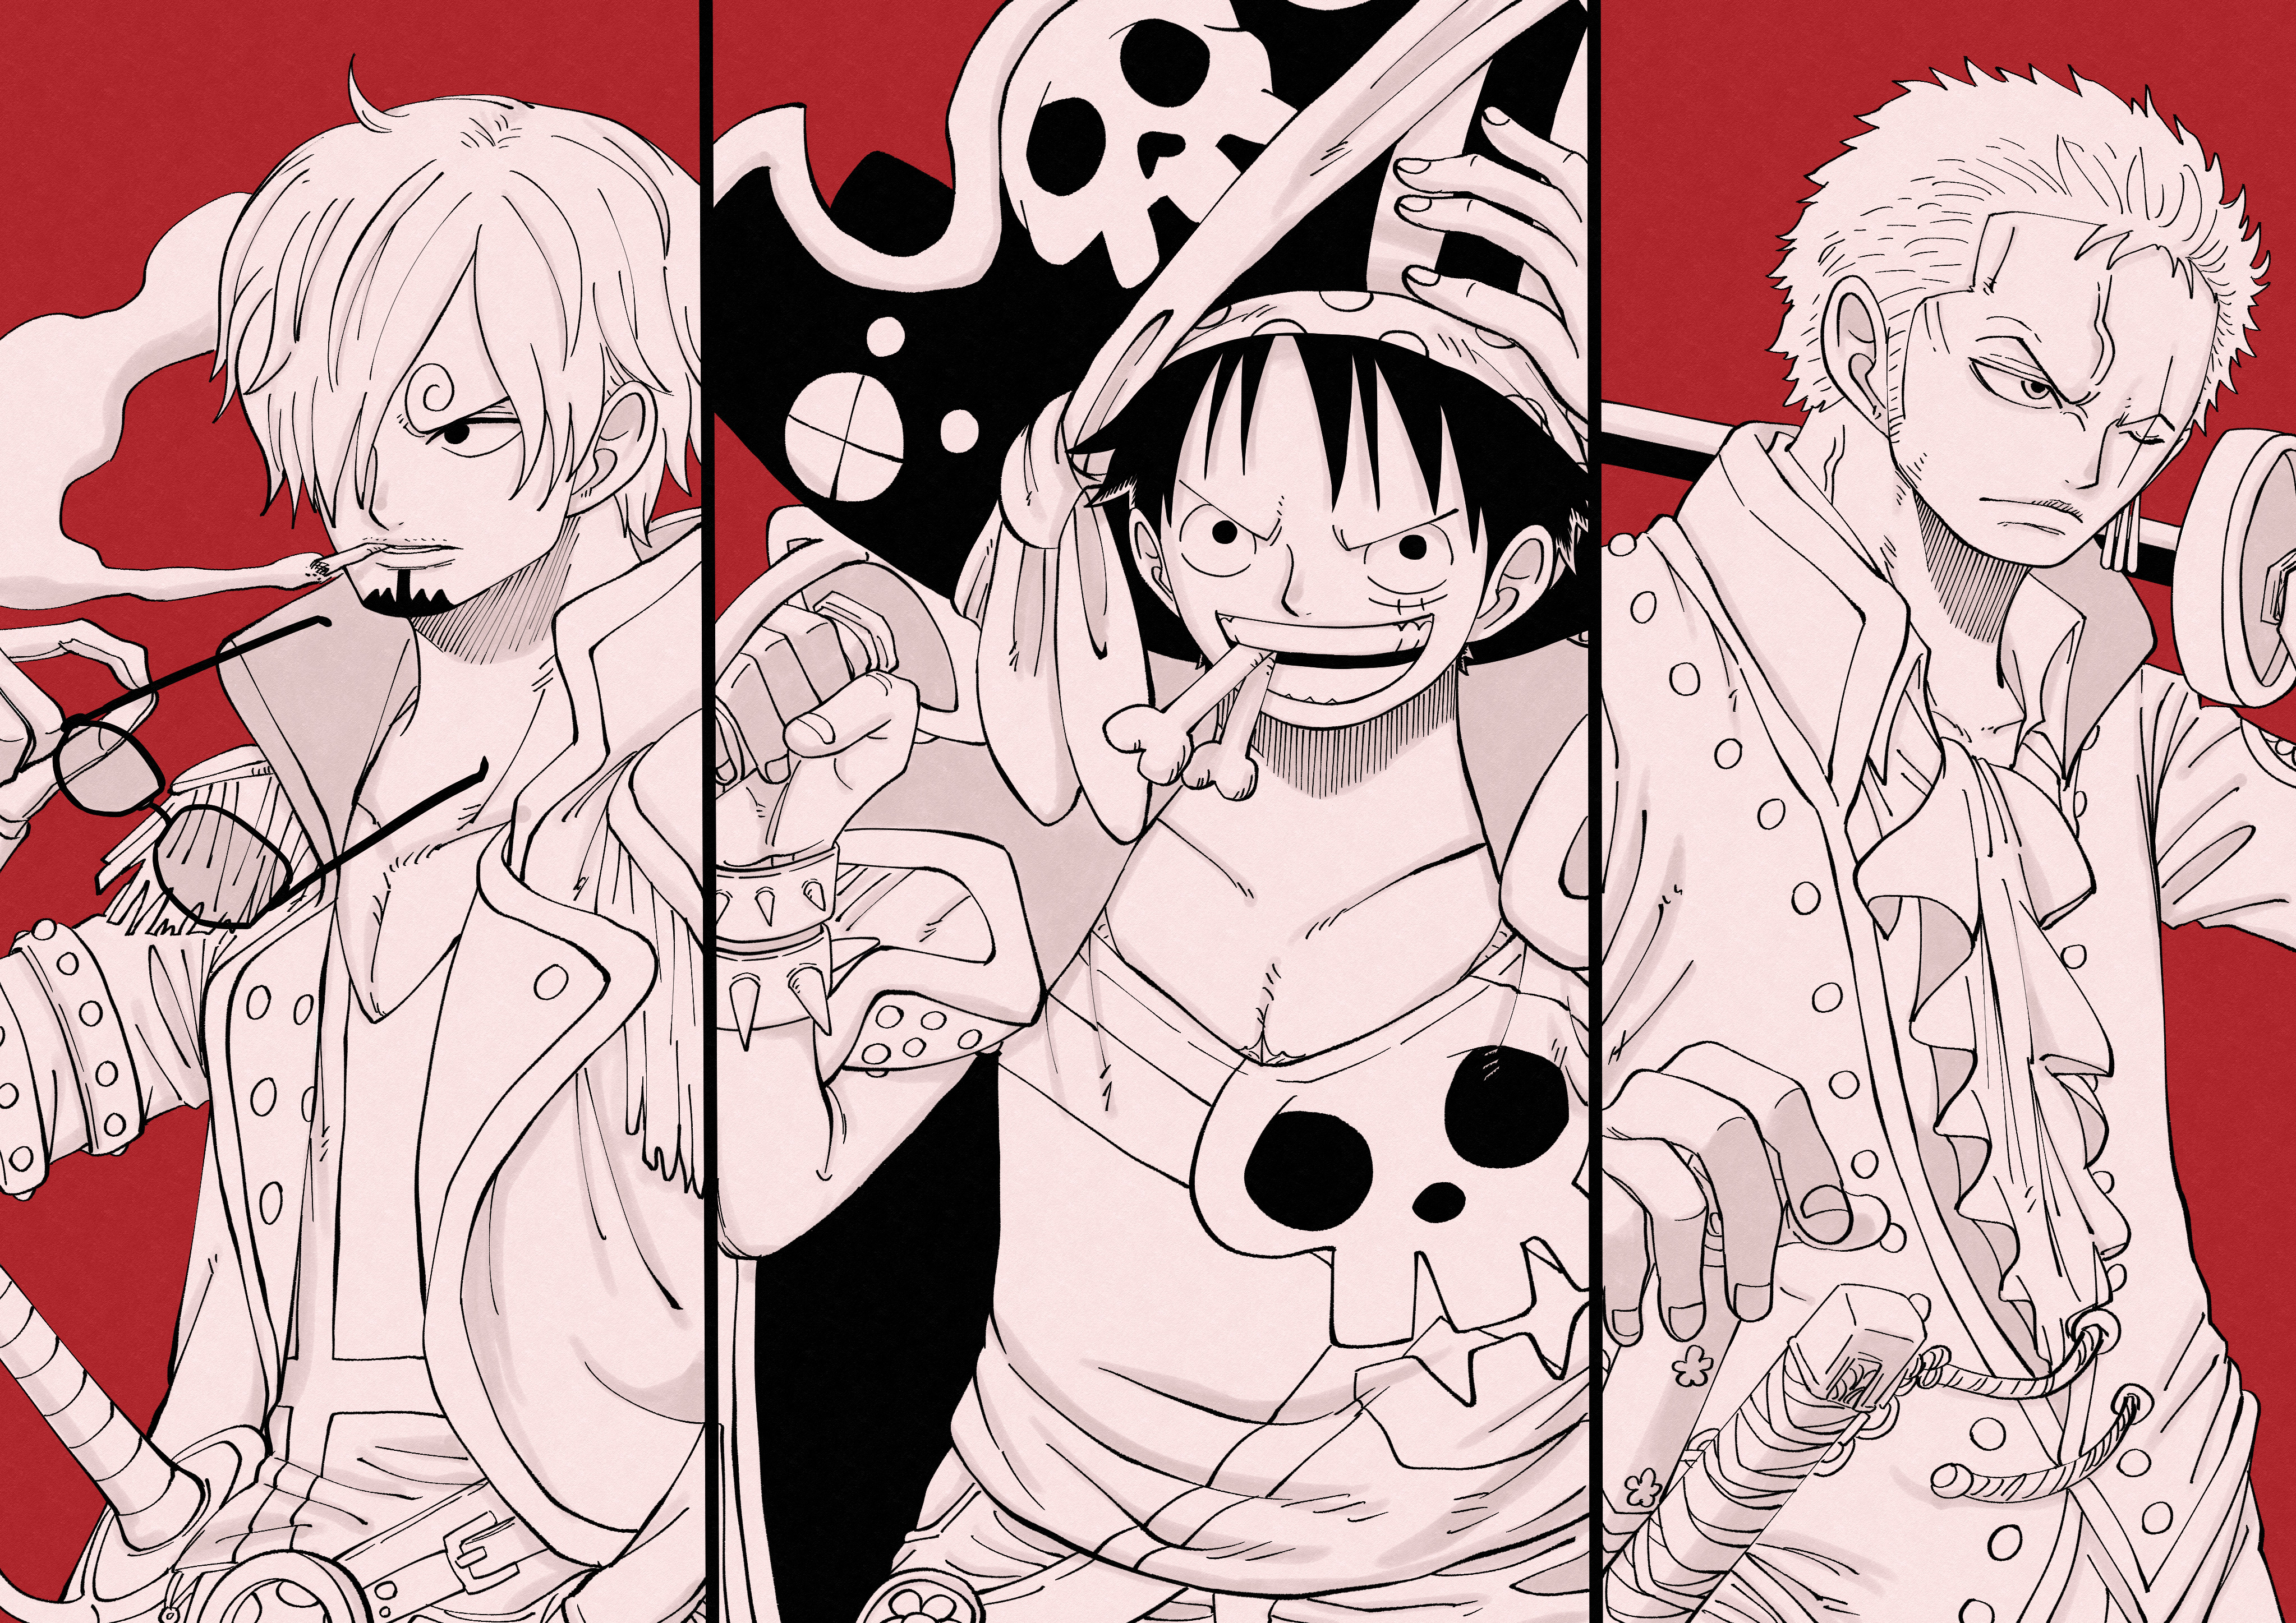 One Piece Film: Red by Riku